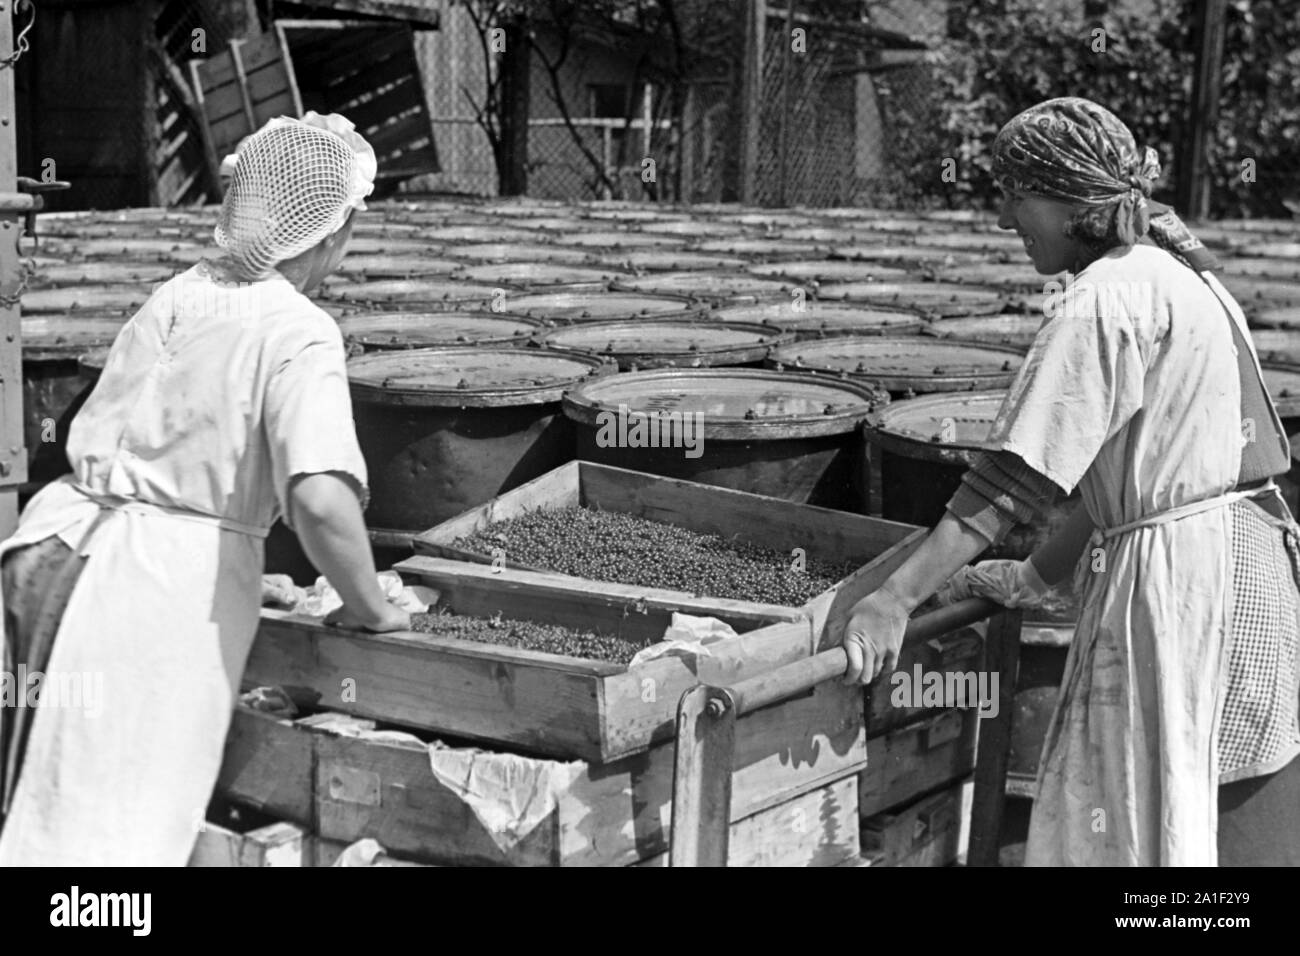 Frauen verarbeiten Rohstoffe in der Konservenfabrik C. Th. Lampe in Braunschweig, Deutschland 1939. Workers with raw material at the canning factory C. Th. Lampe in Brunswick, Germany 1939. Stock Photo